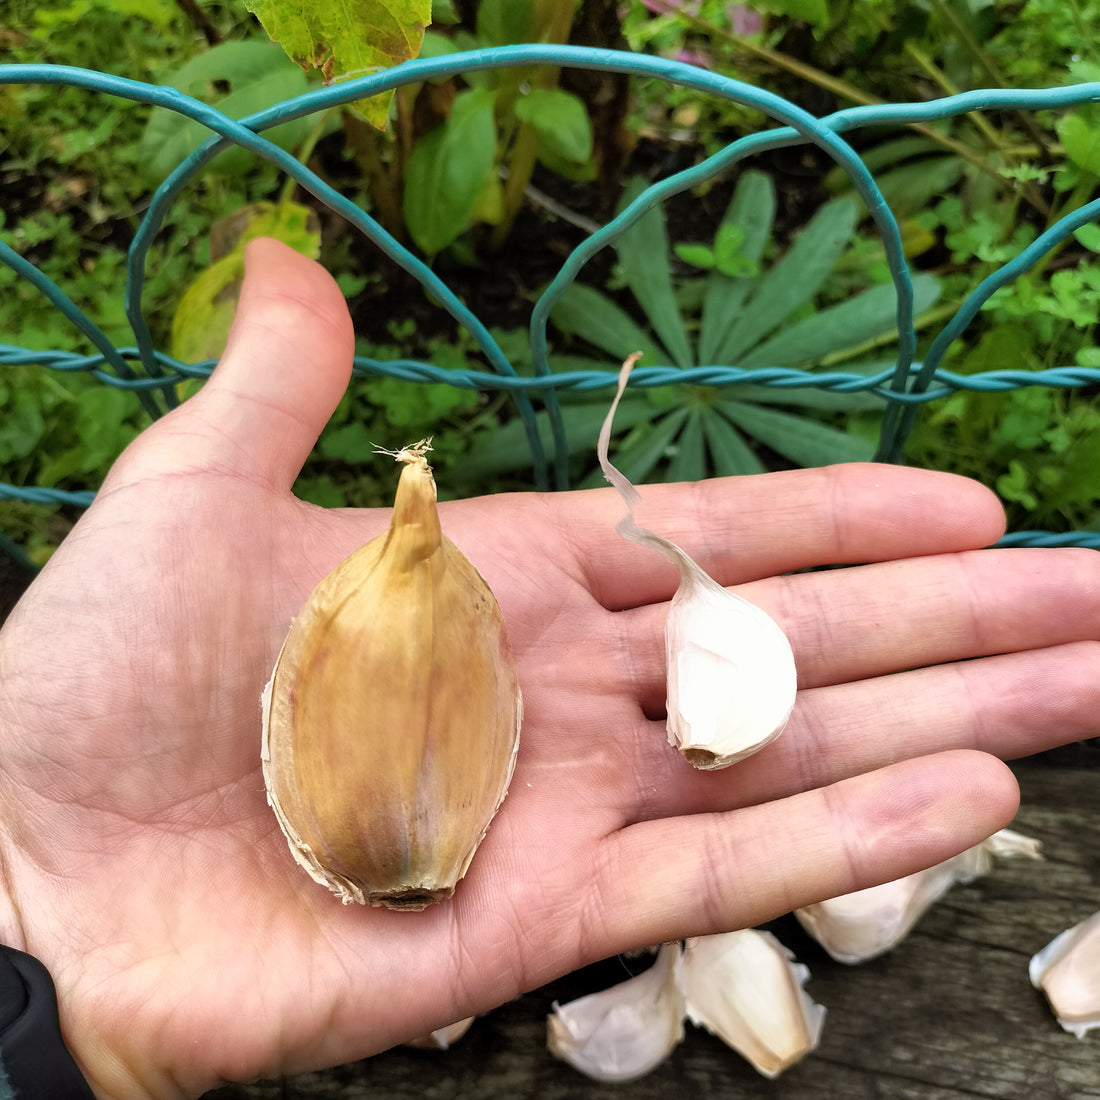 How To Grow Garlic From Bulbs